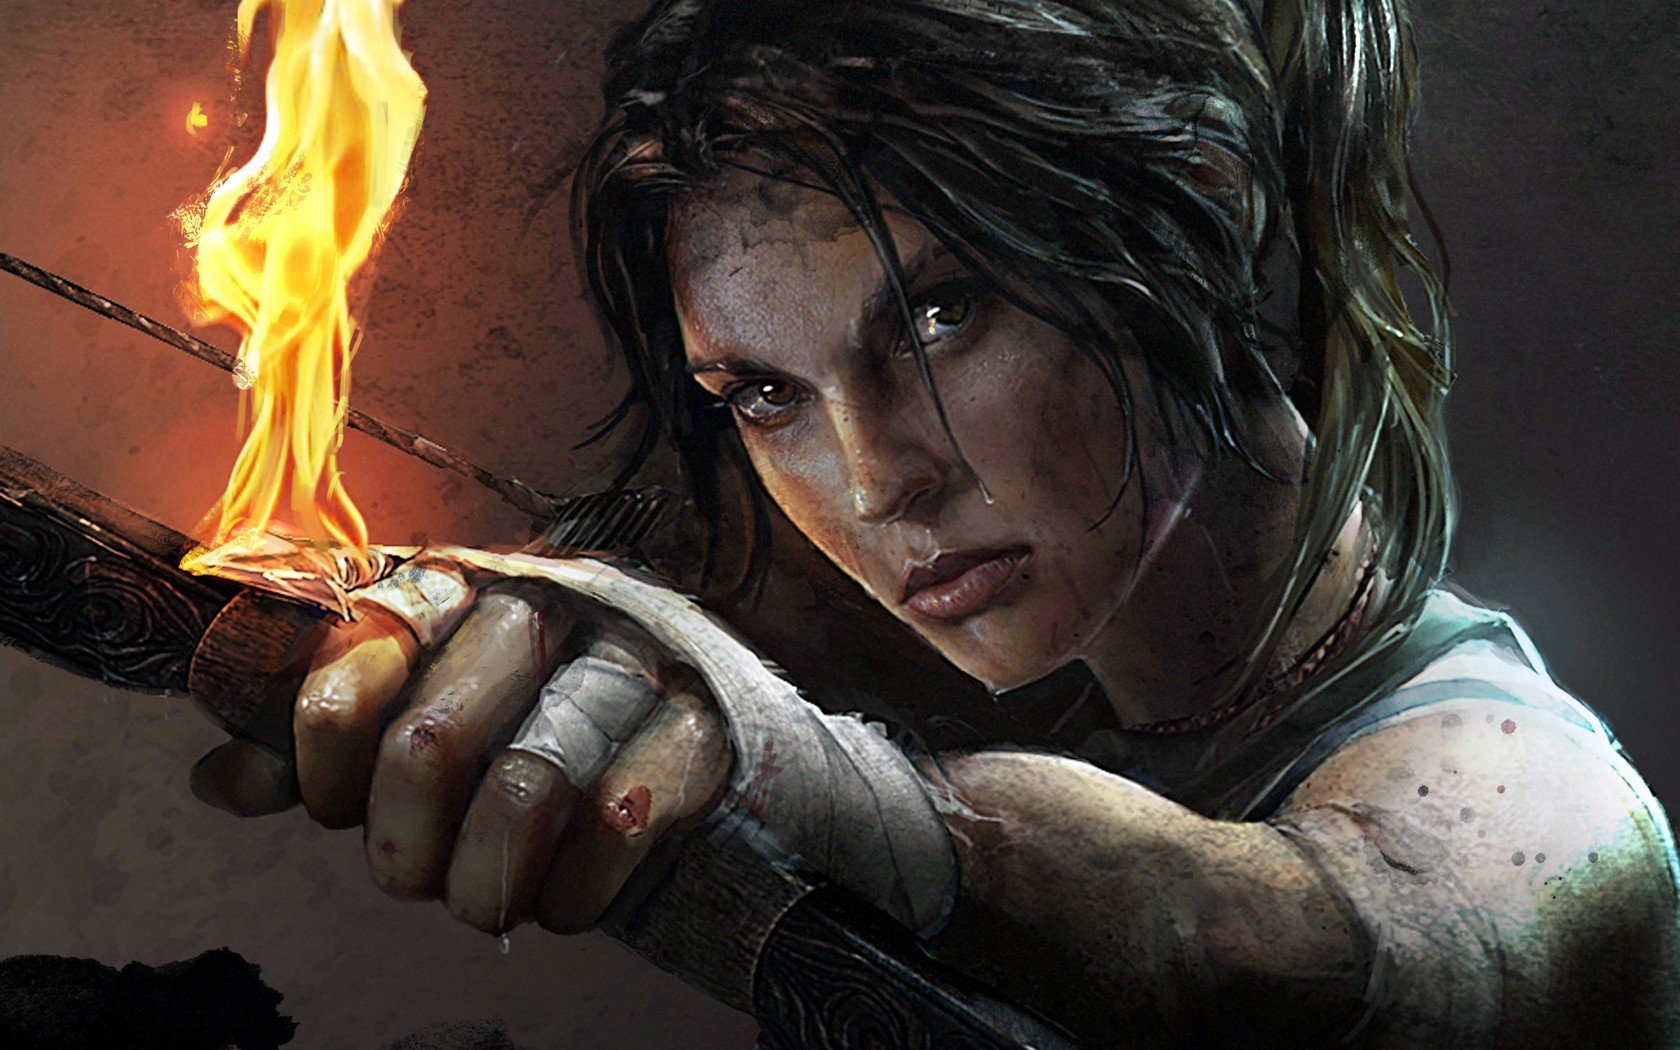 Best Tomb Raider (Lara Croft) background ID:437076 for High Resolution hd 1680x1050 computer